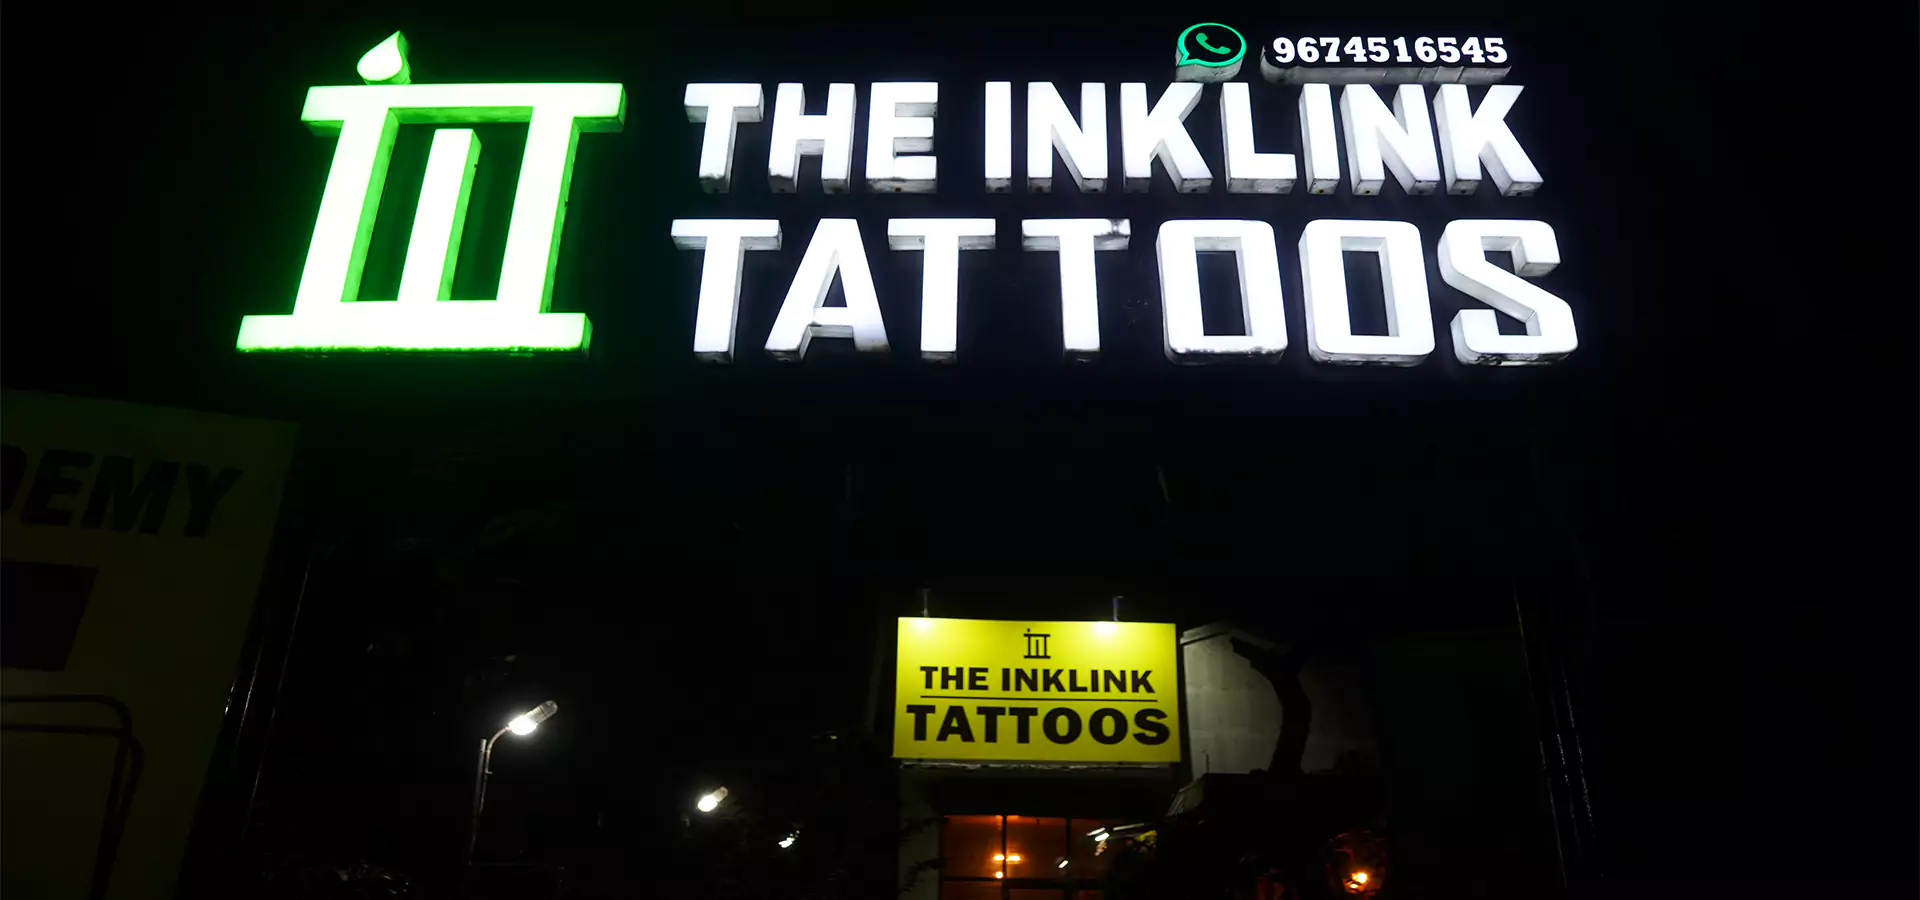 Arm band tattoo for mallbhai   Ink Link Tattoo Studio  Facebook